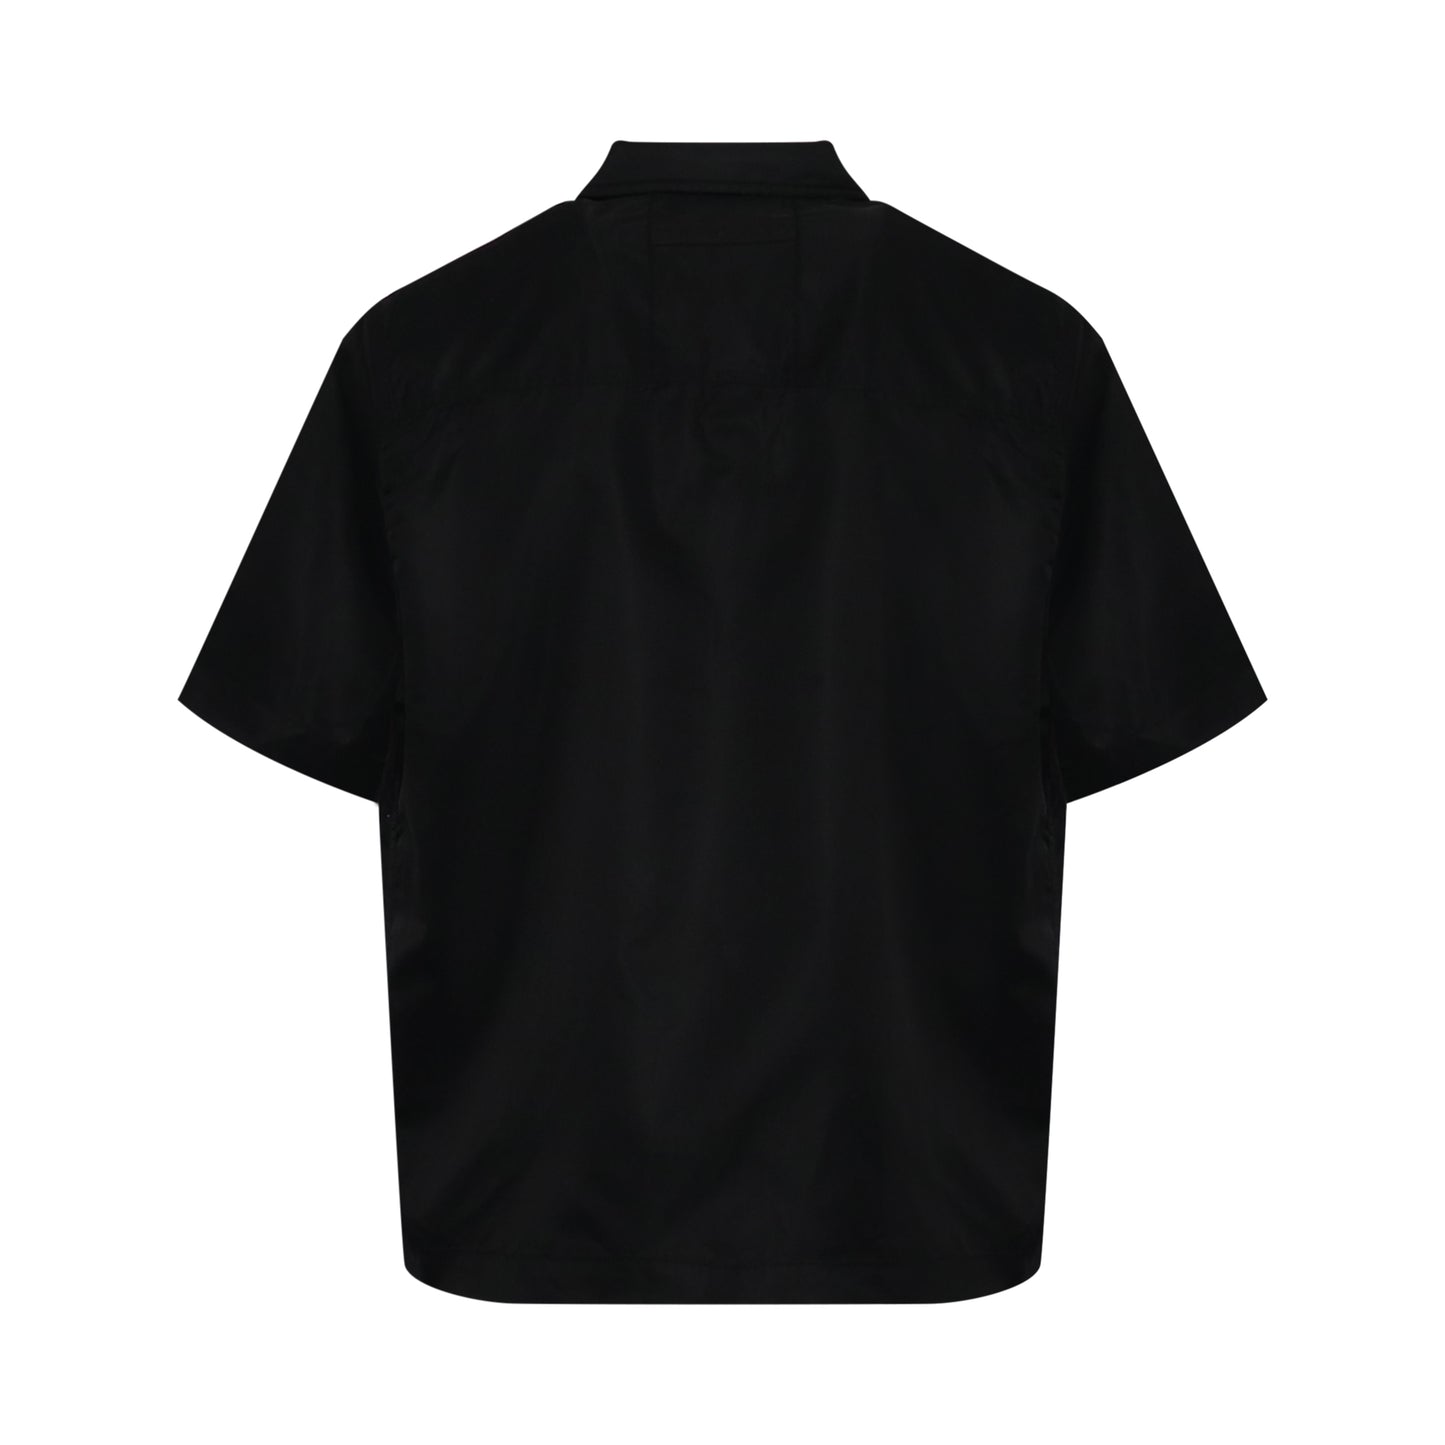 Rollercoaster Short Sleeve Shirt in Black